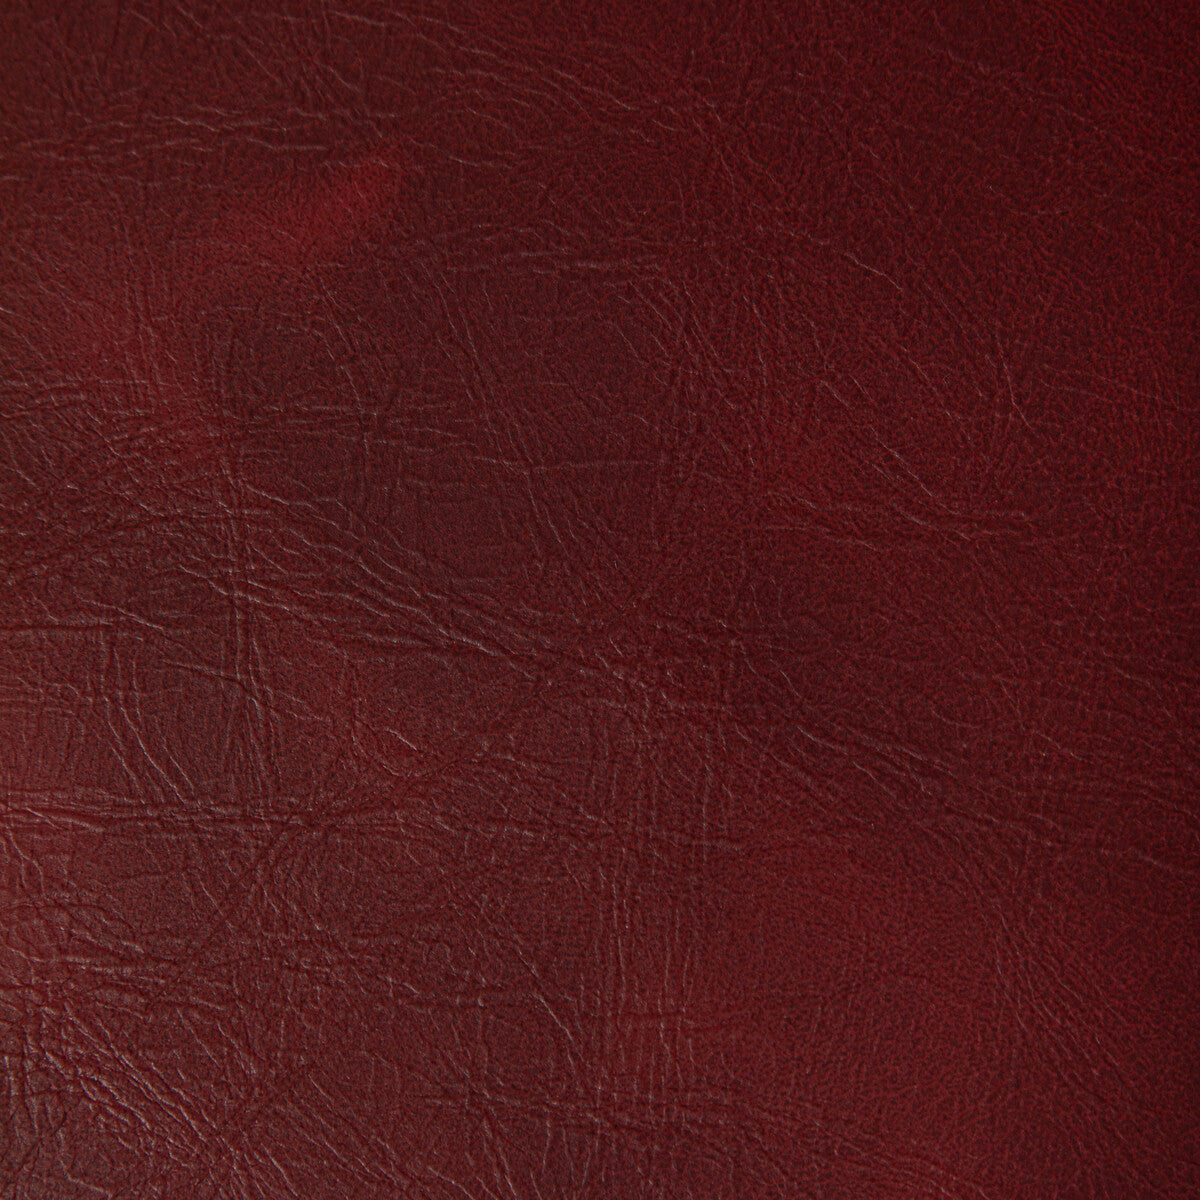 Rambler fabric in fireside color - pattern RAMBLER.909.0 - by Kravet Contract